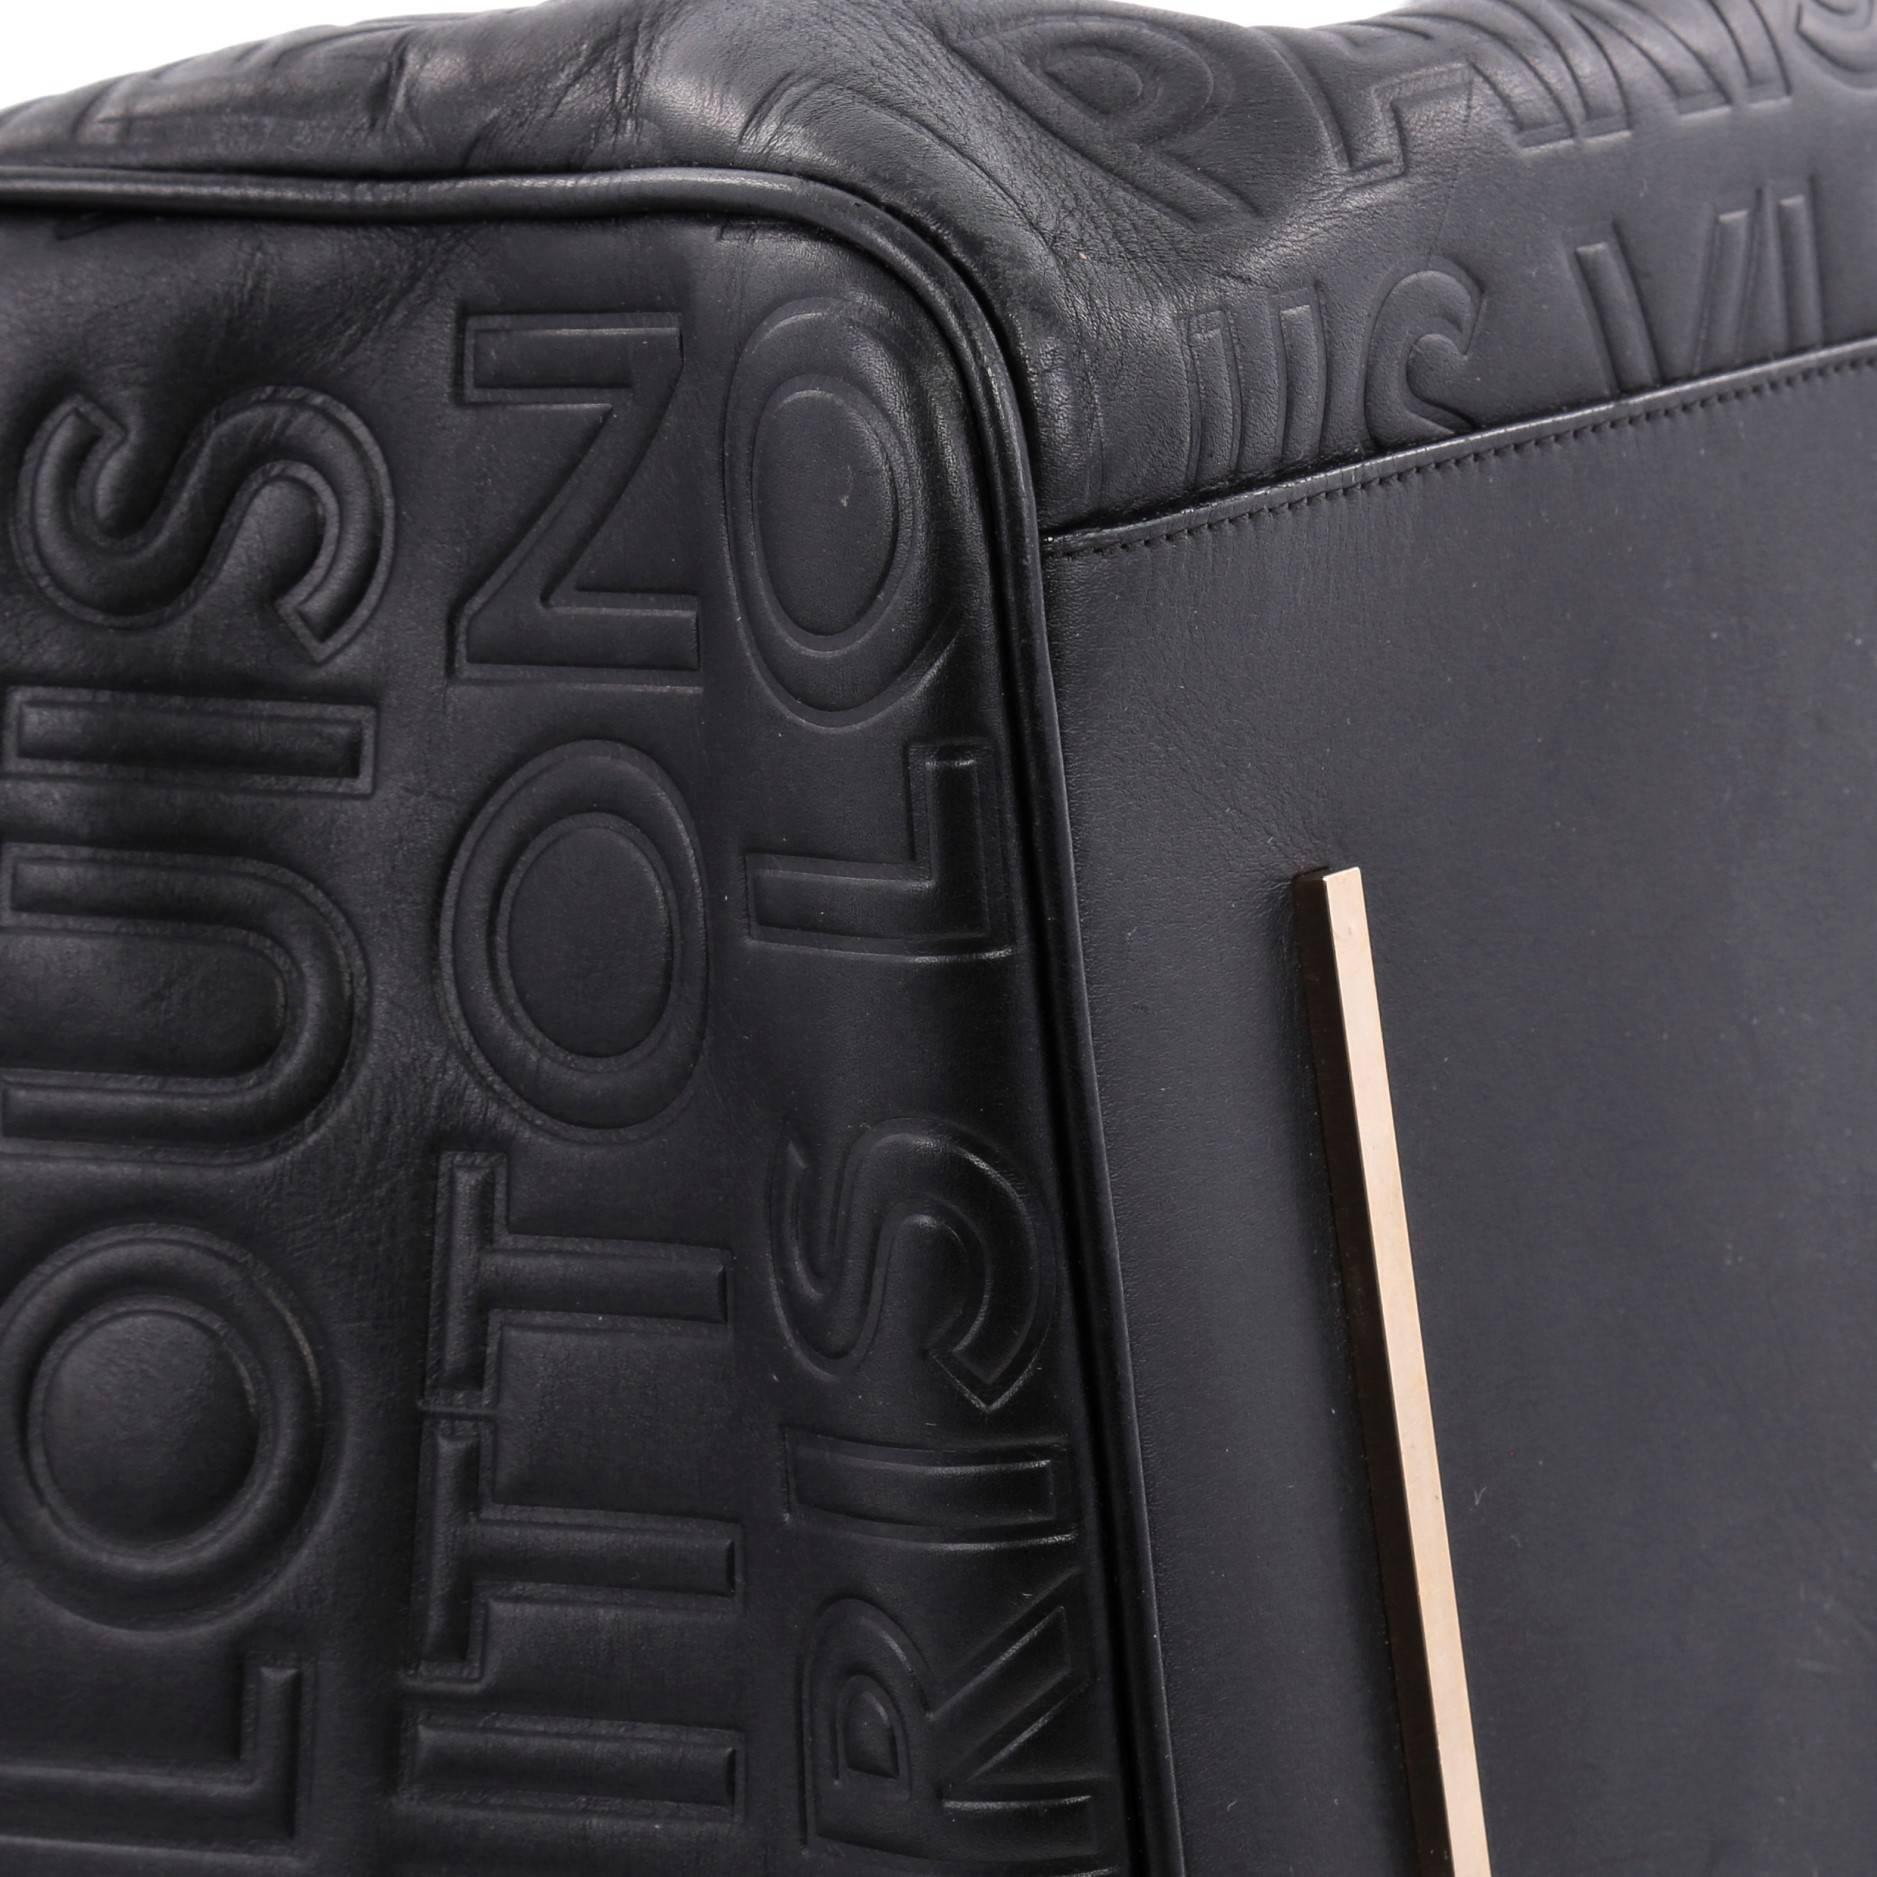 Louis Vuitton Paris Speedy Cube Bag Embossed Leather 30 3